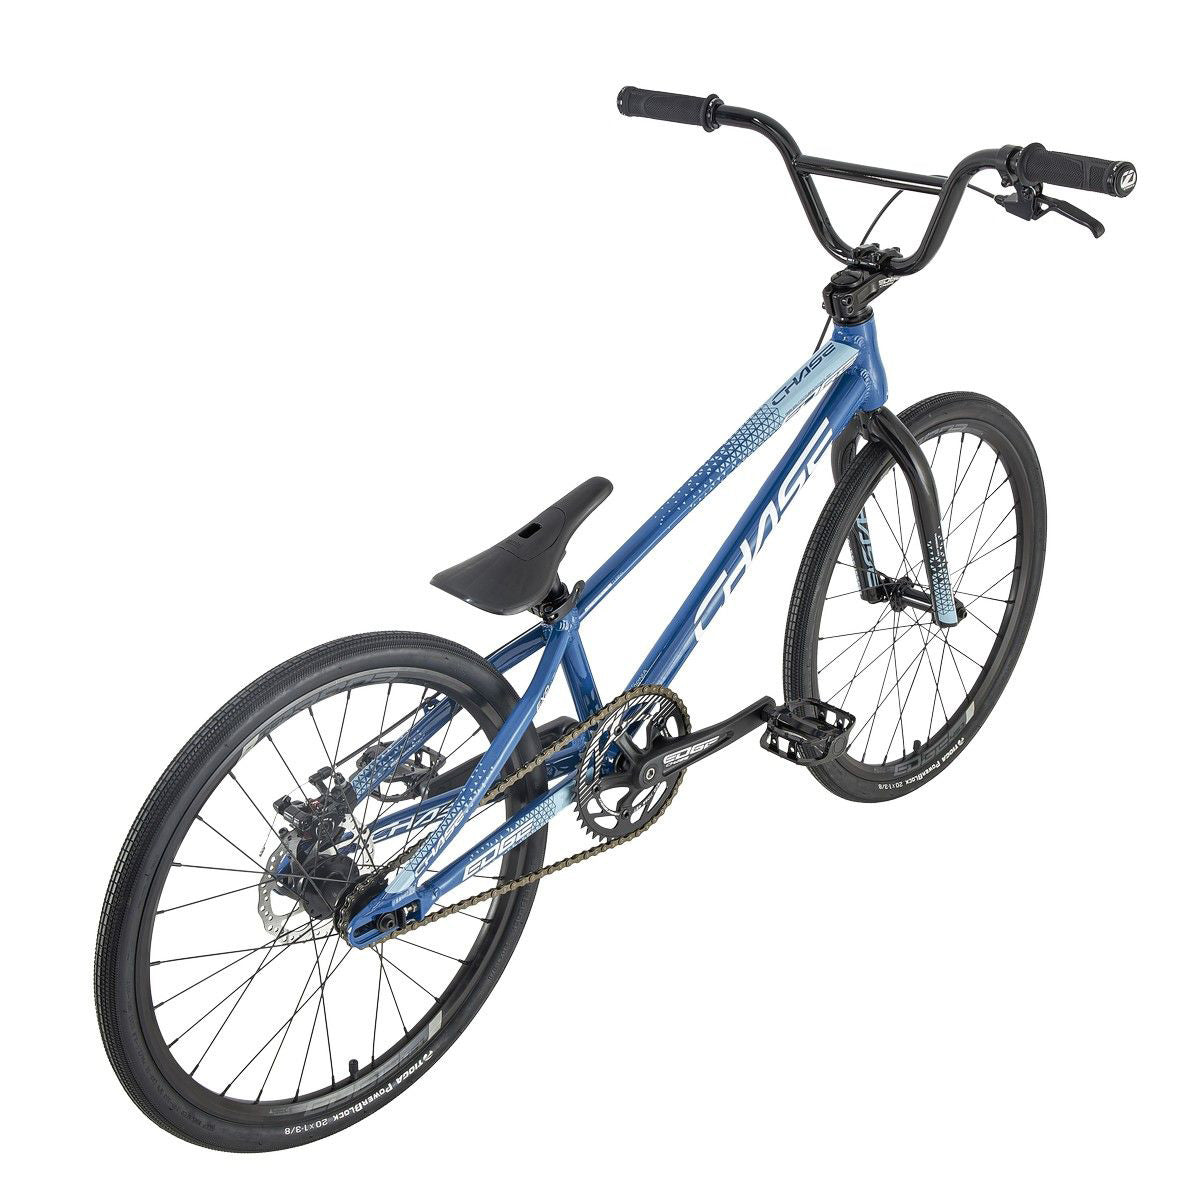 Chase Edge Expert BMX Bike-Blue at J&R Bicycles – J&R Bicycles, Inc.